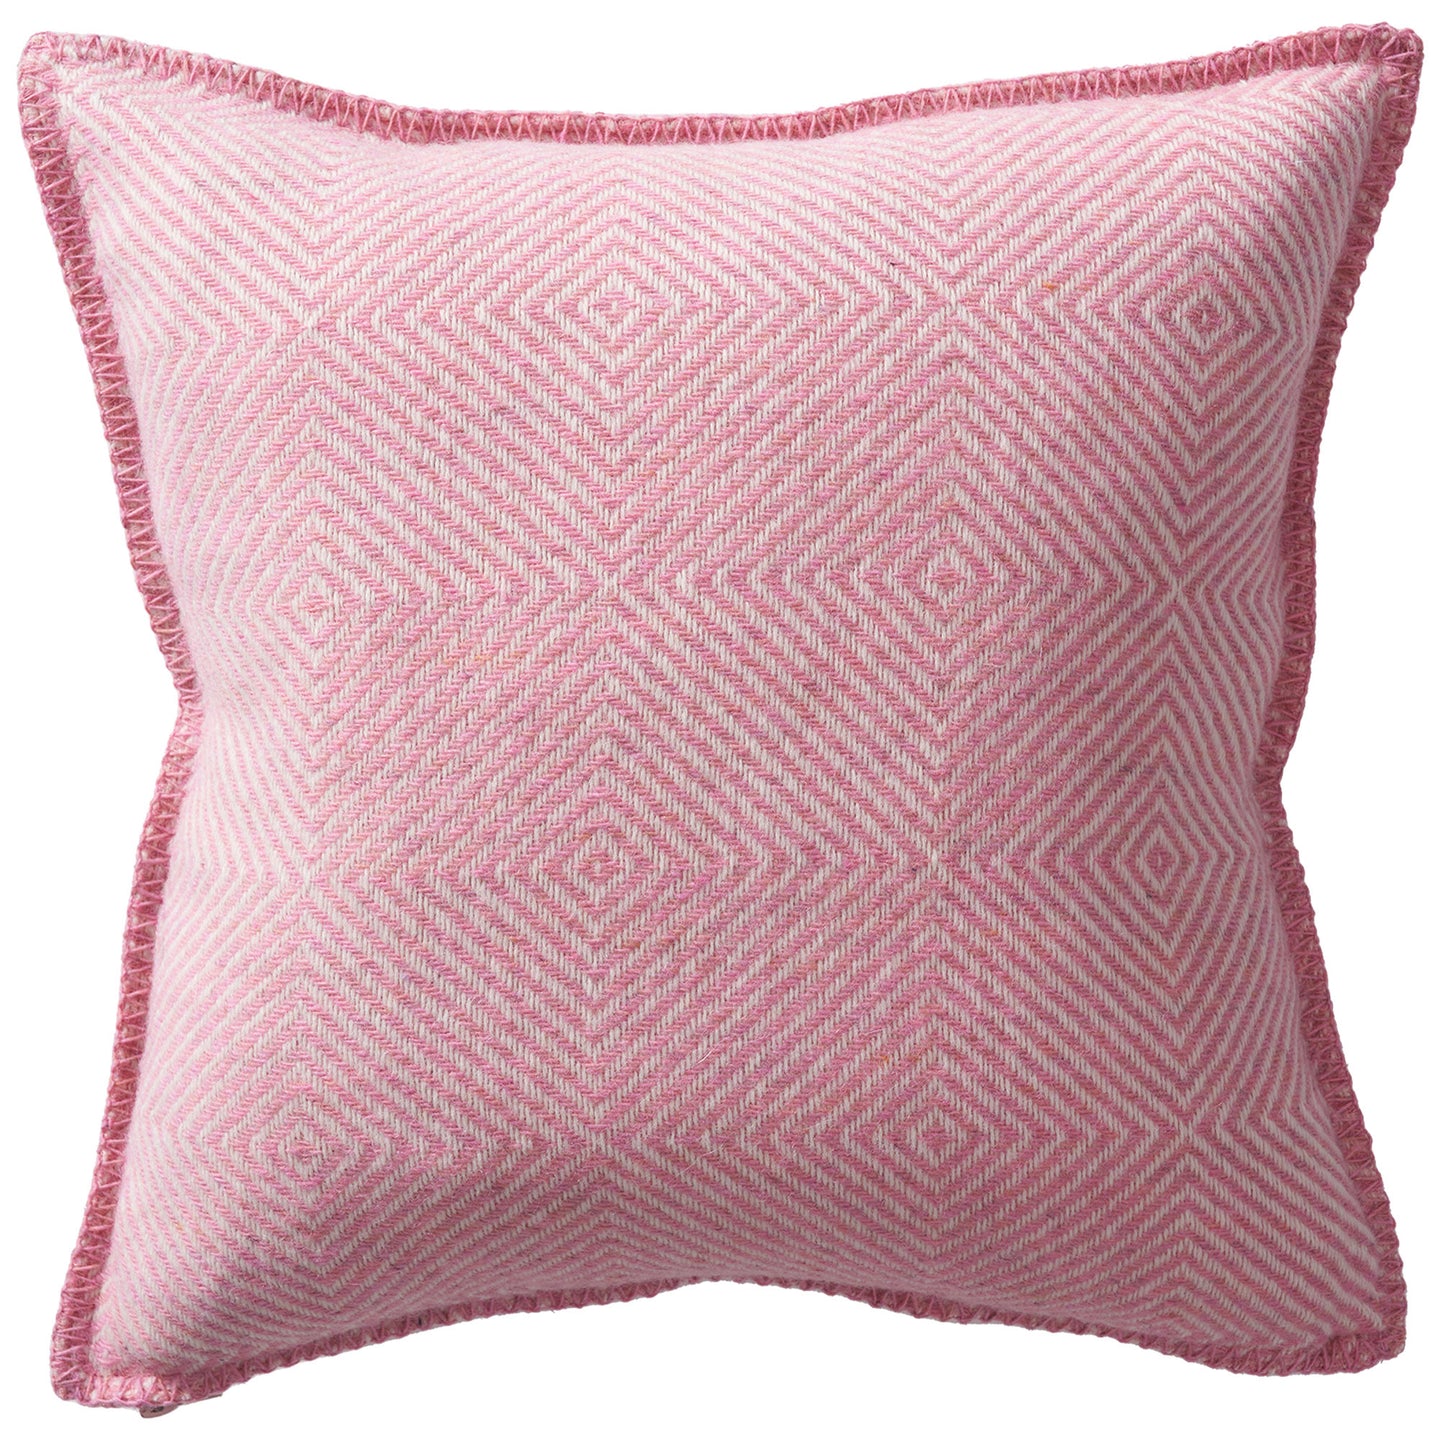 Gooseye Pink Cushion Cover 45x45cm